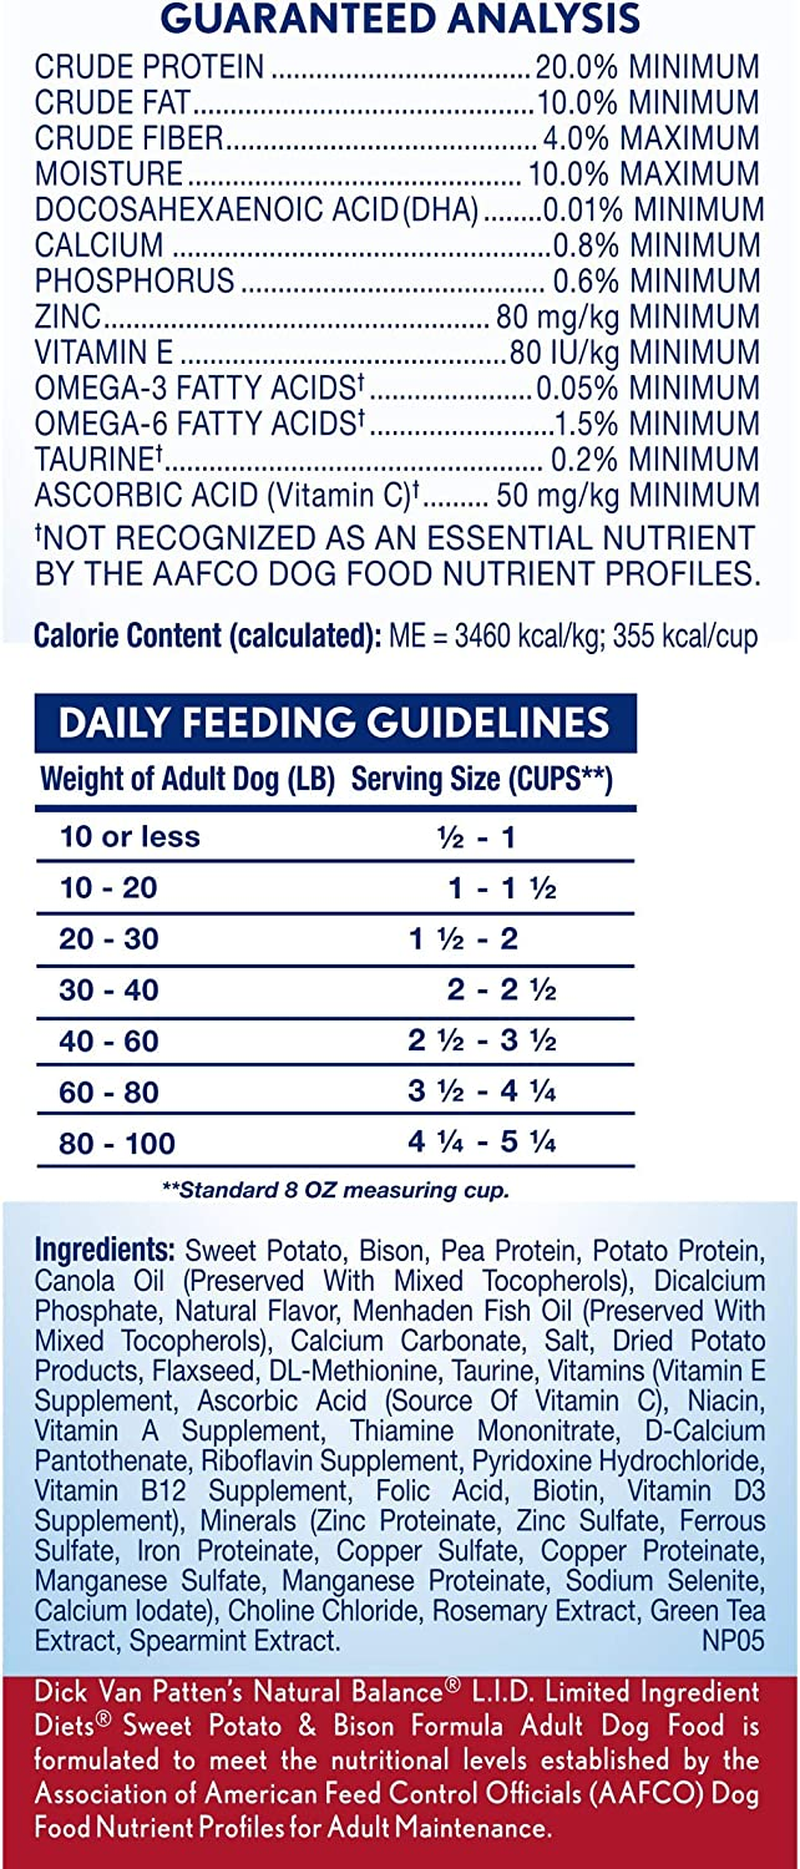 Limited Ingredient Diet Sweet Potato & Bison| Adult Grain-Free Dry Dog Food | 4-Lb. Bag